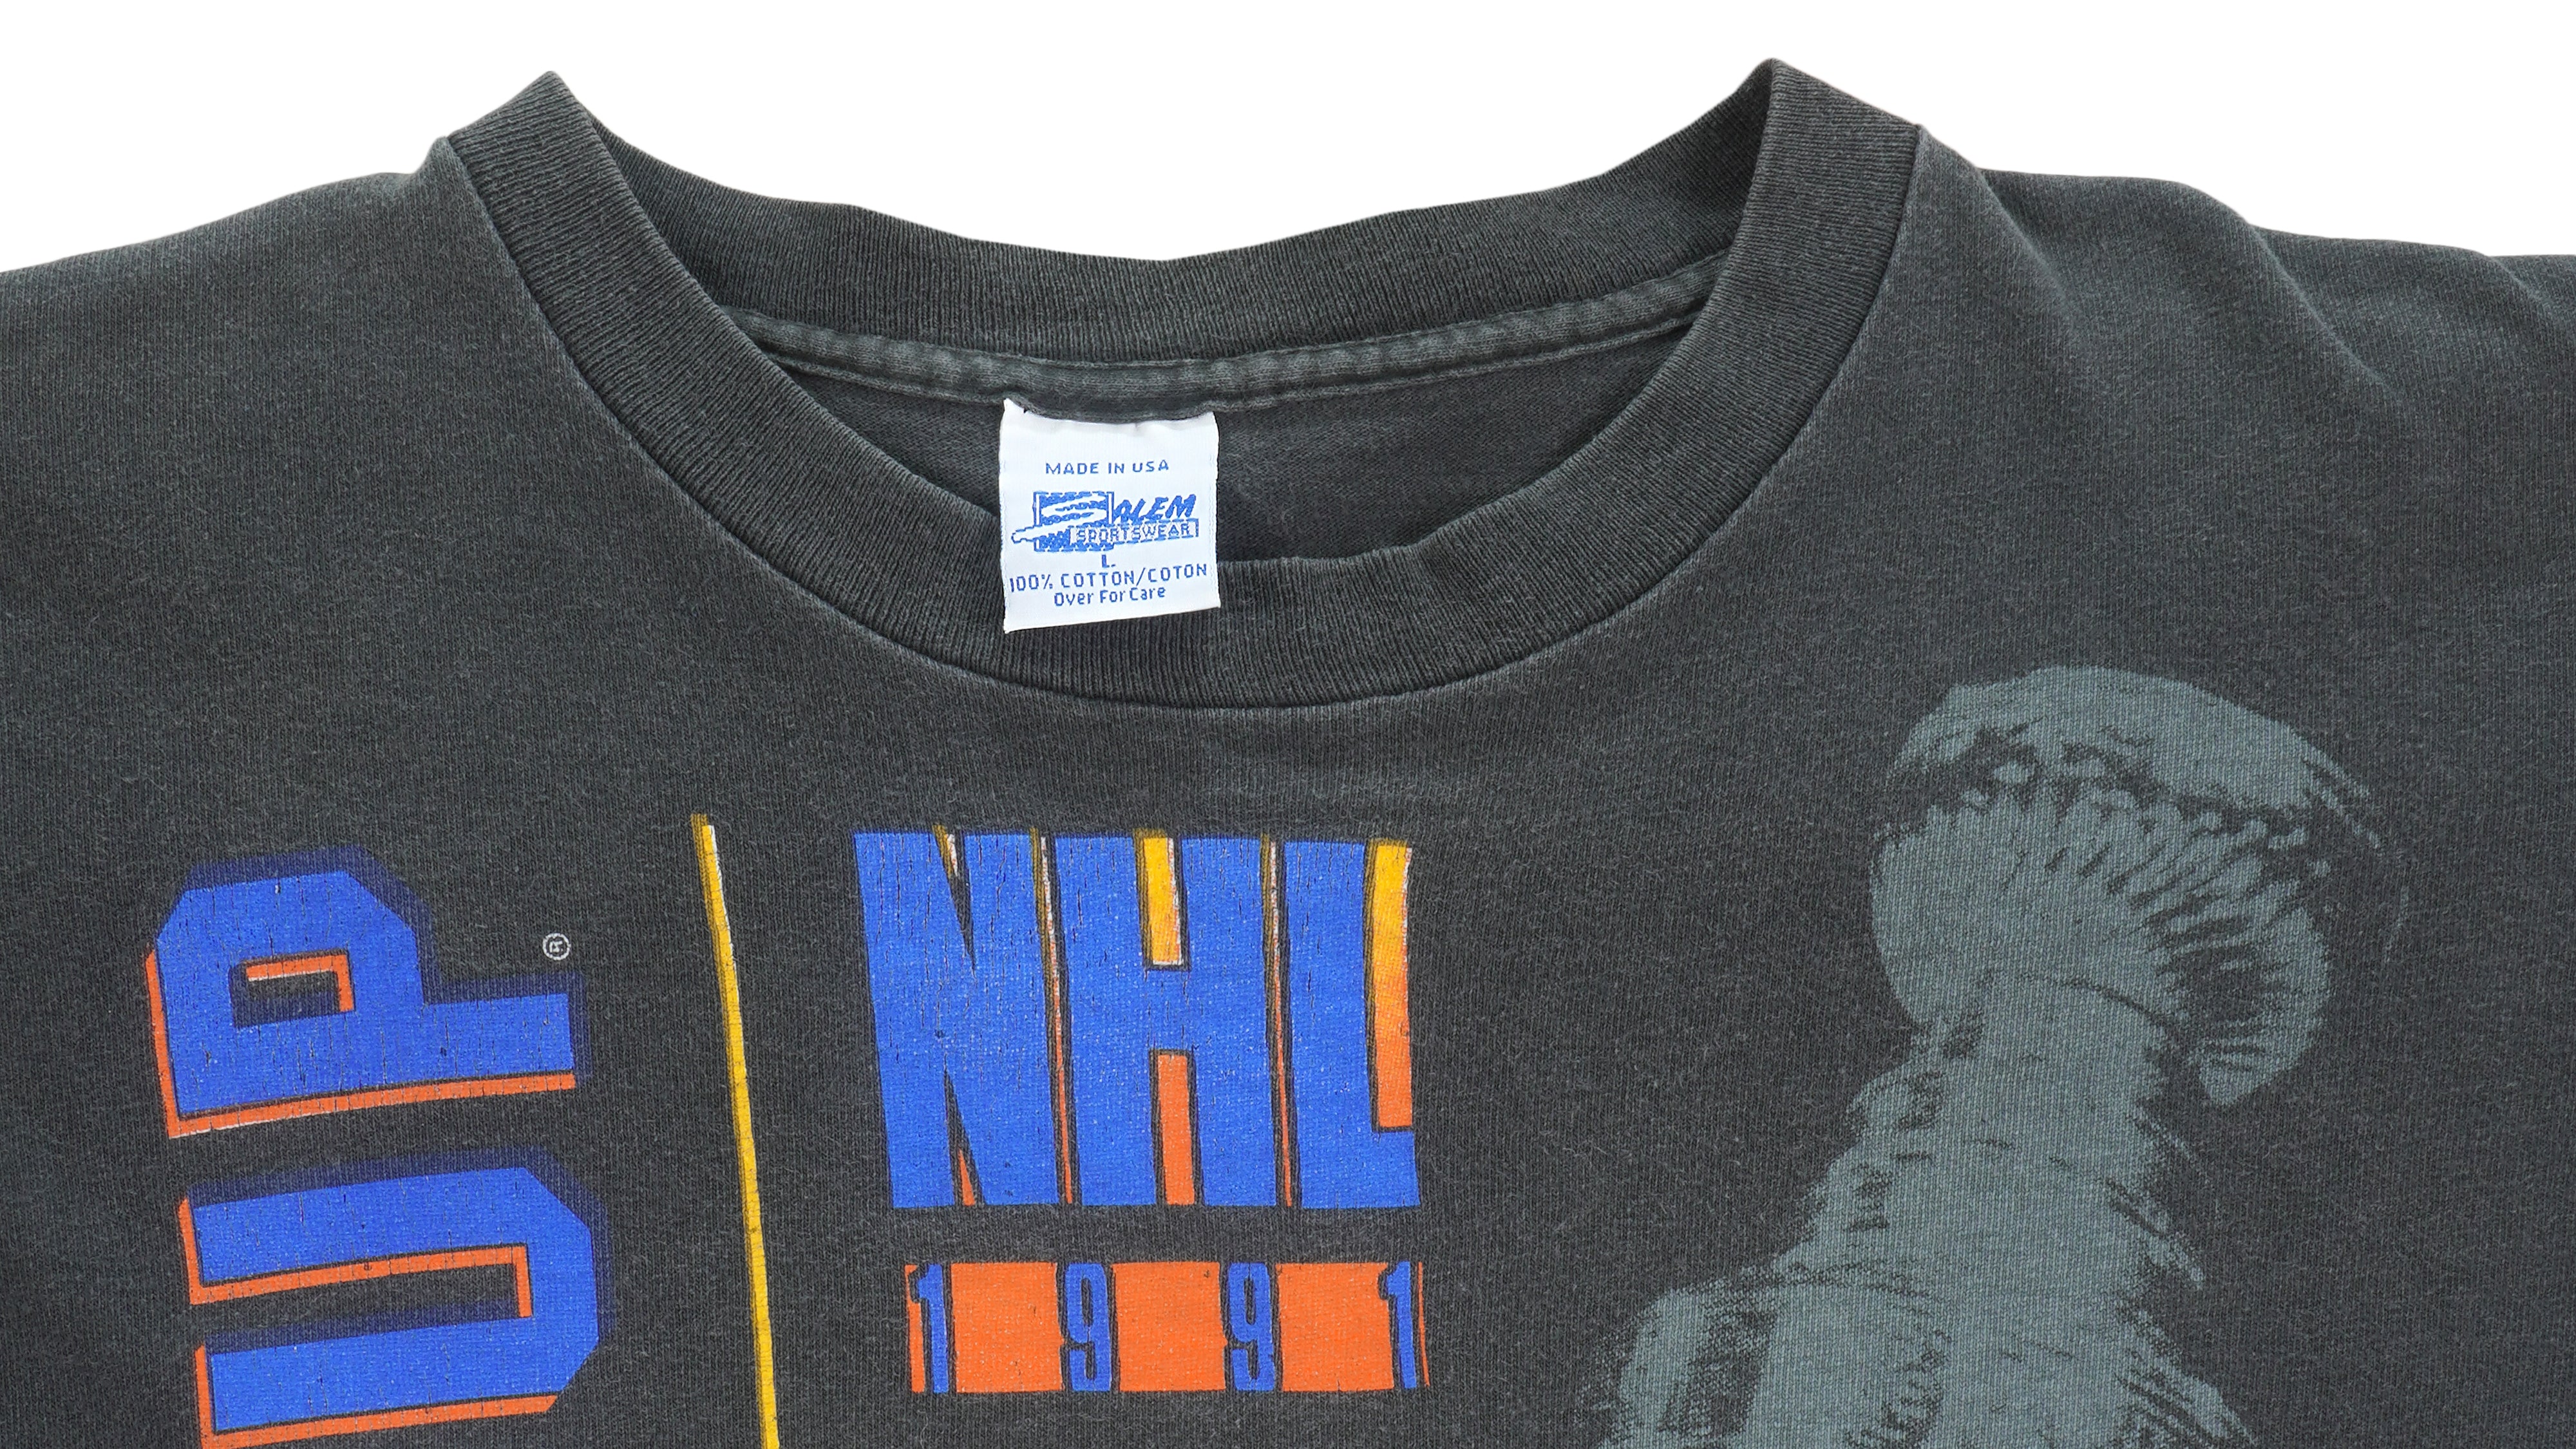 Vintage 1991 Boston Bruins Double Color T-shirt Made by Salem